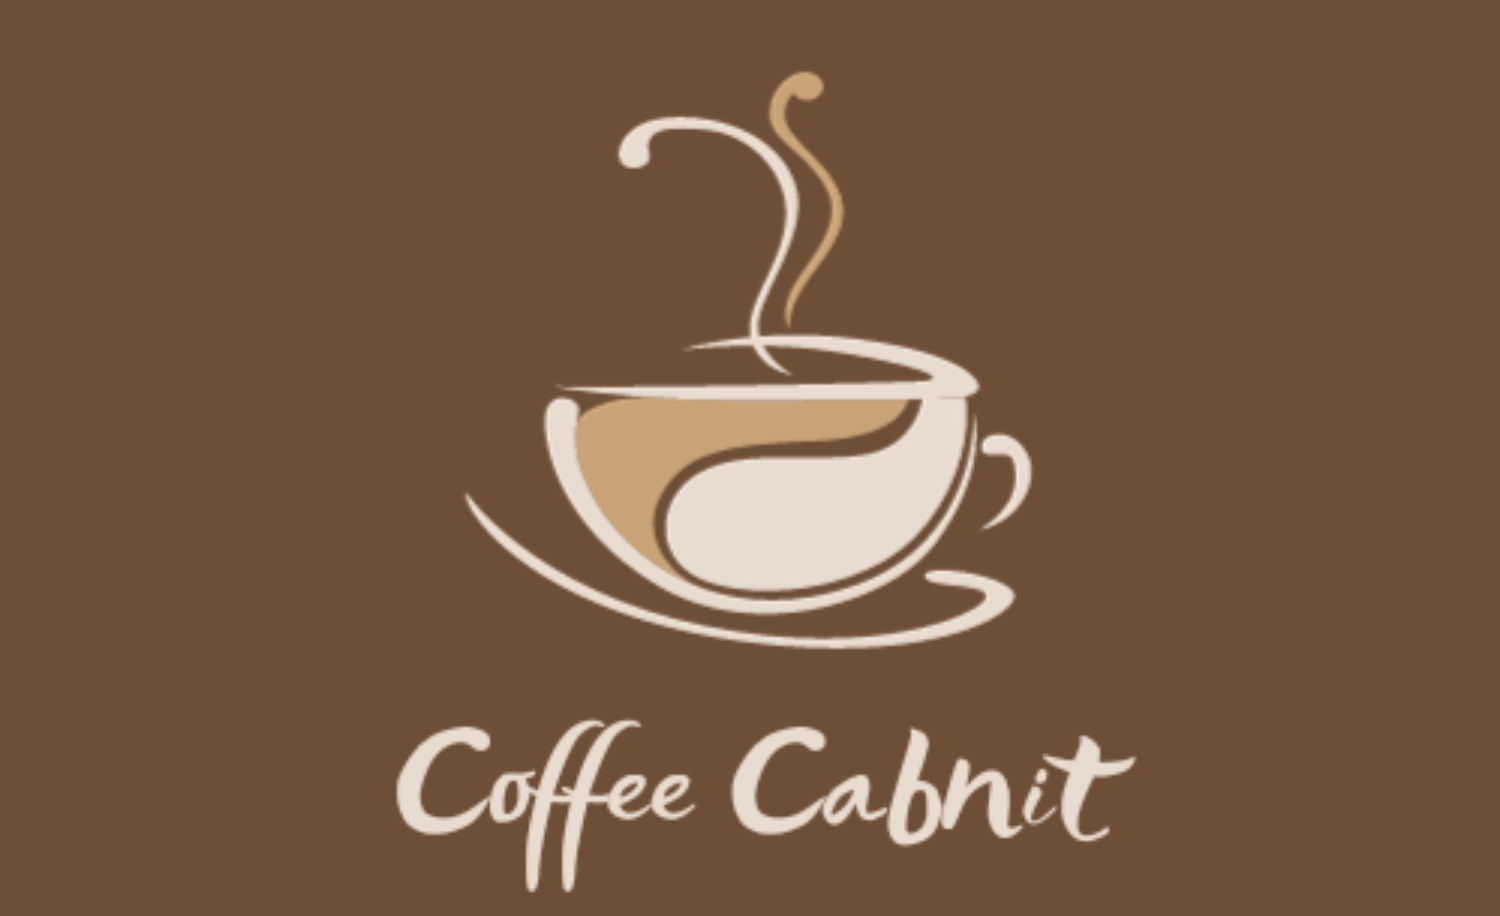 Coffee Cabnit